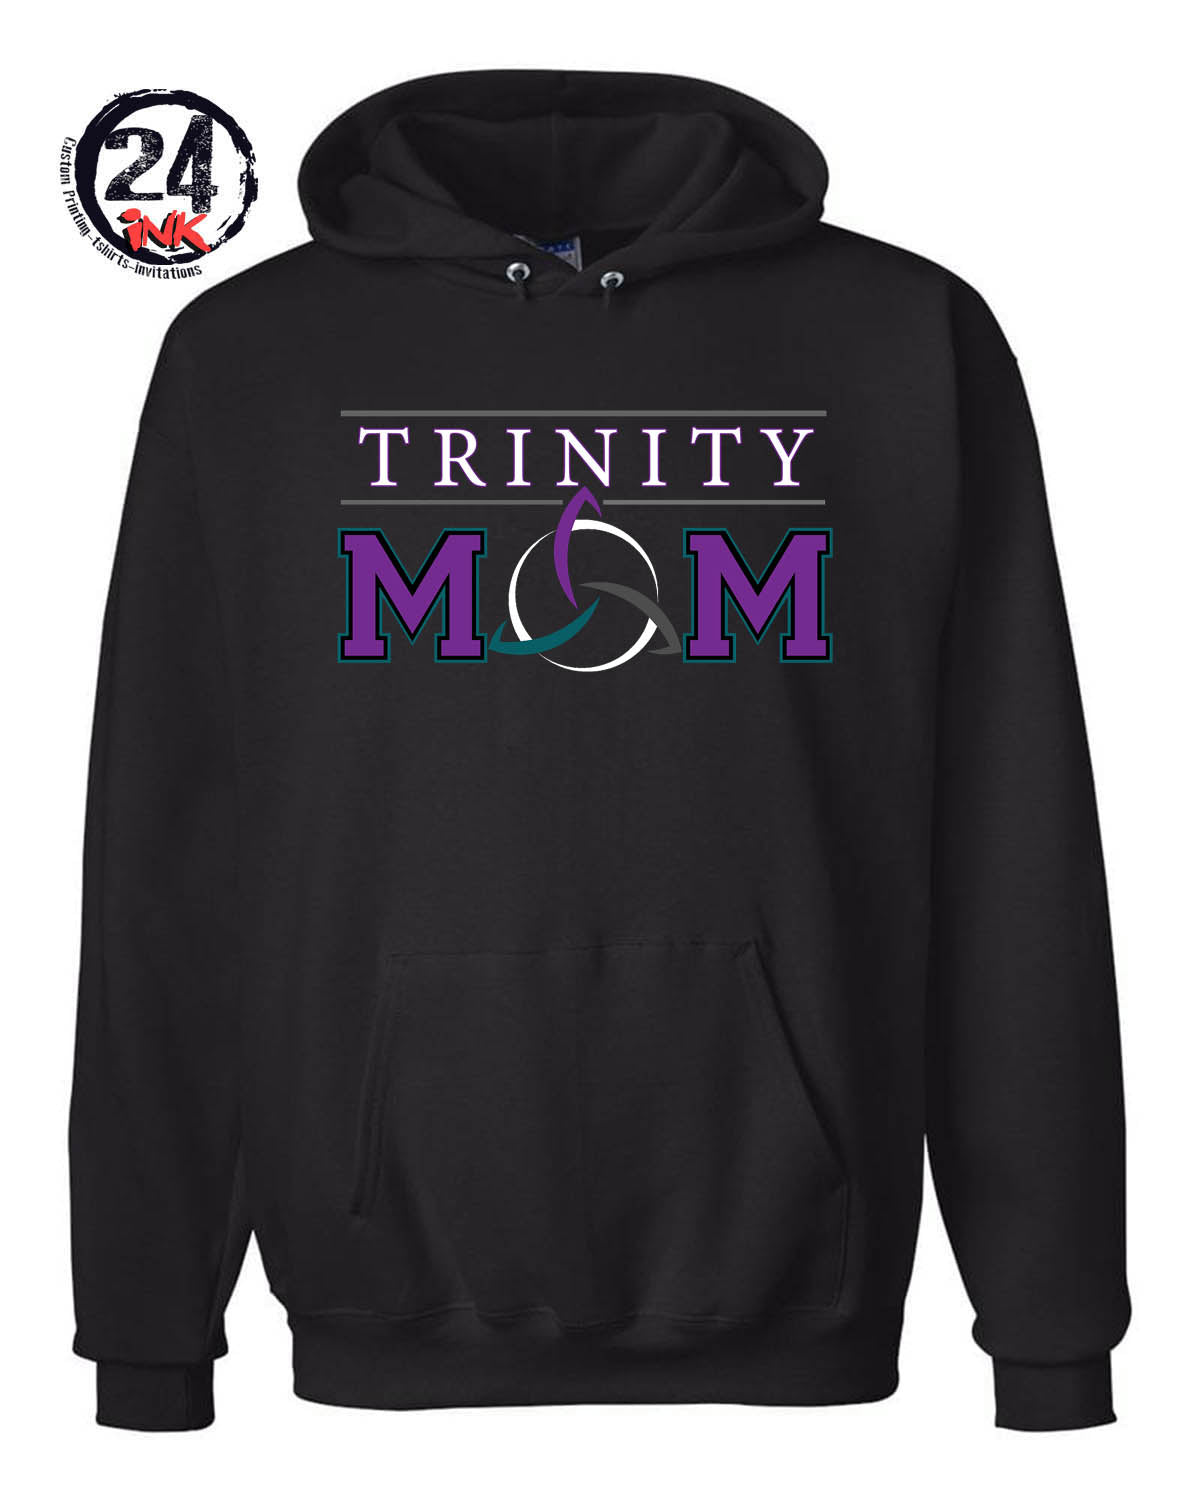 Trinity Mom Hooded Sweatshirt